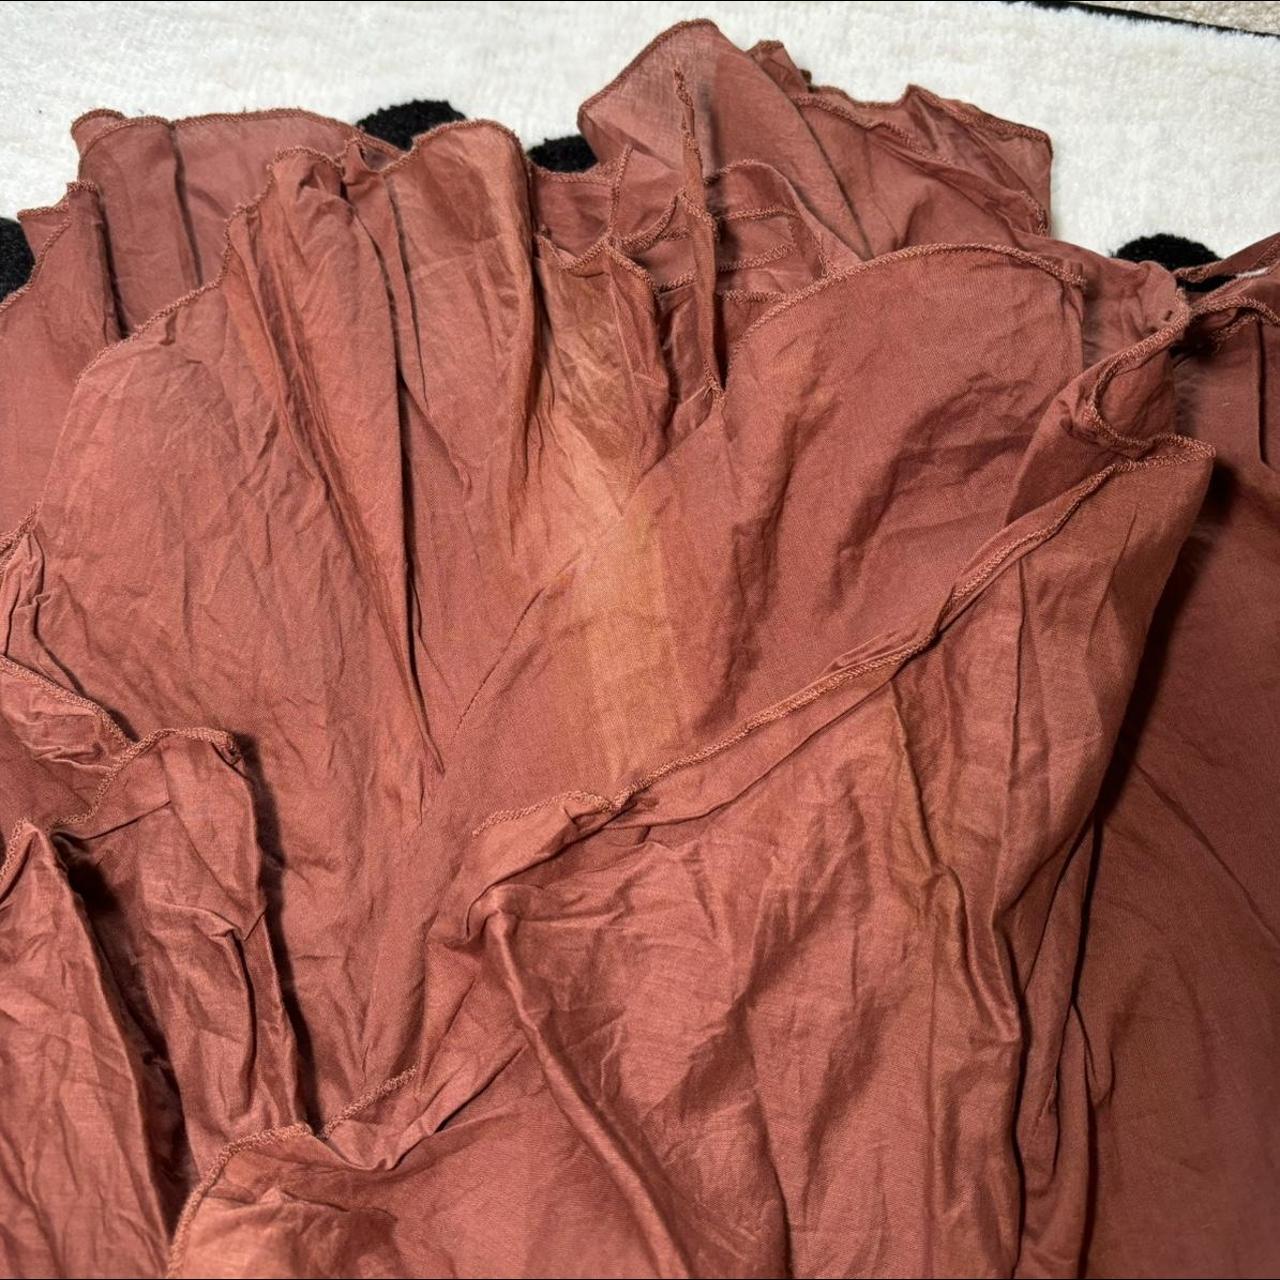 Fiorucci Women's Orange and Brown Skirt (8)